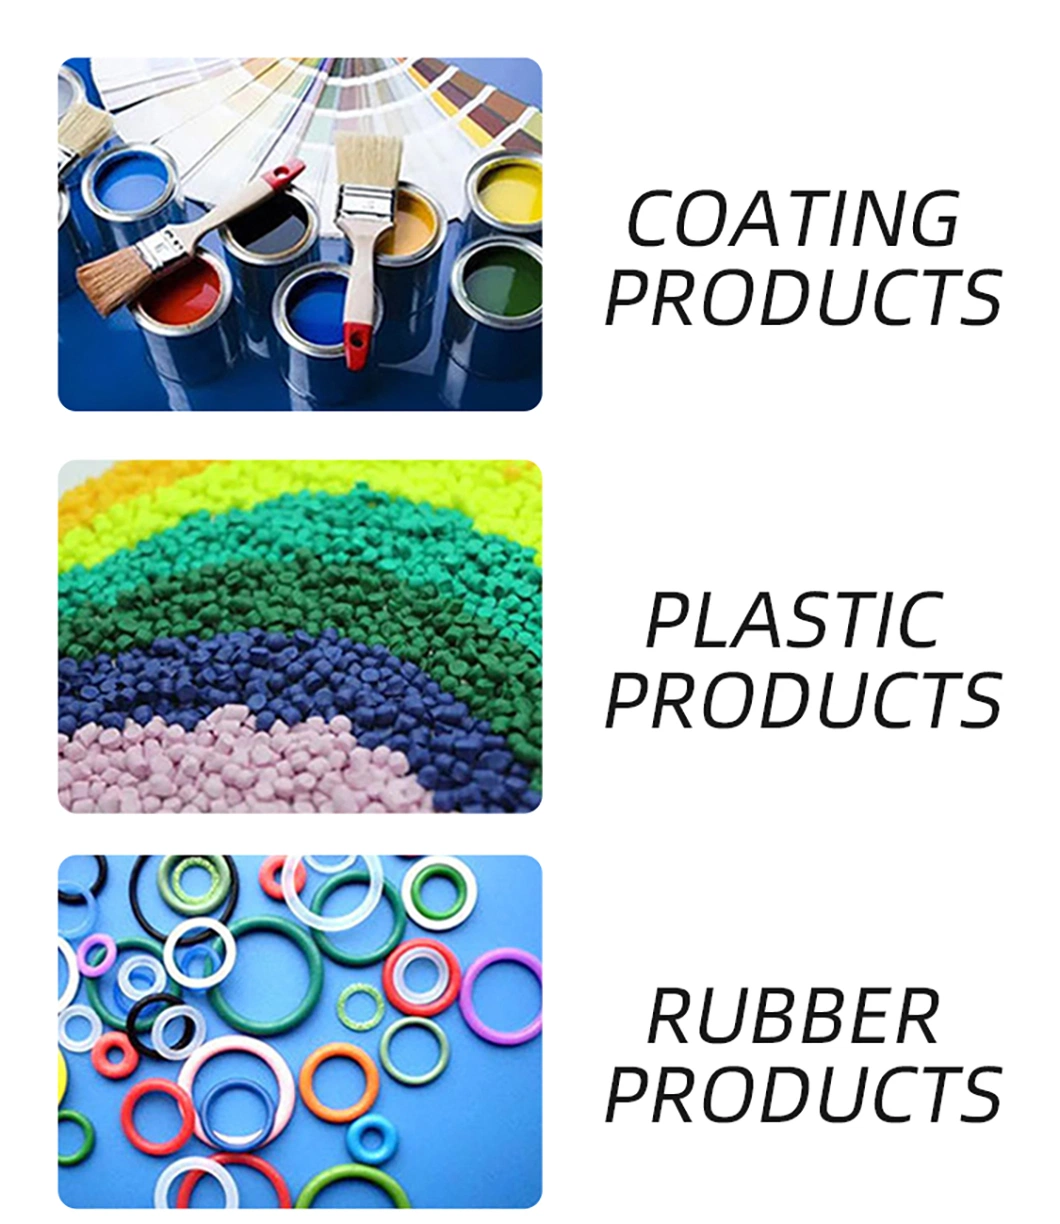 Transparent Violet 2br Solvent Dye Violet 31 for Plastics PS, R-PVC, PMMA